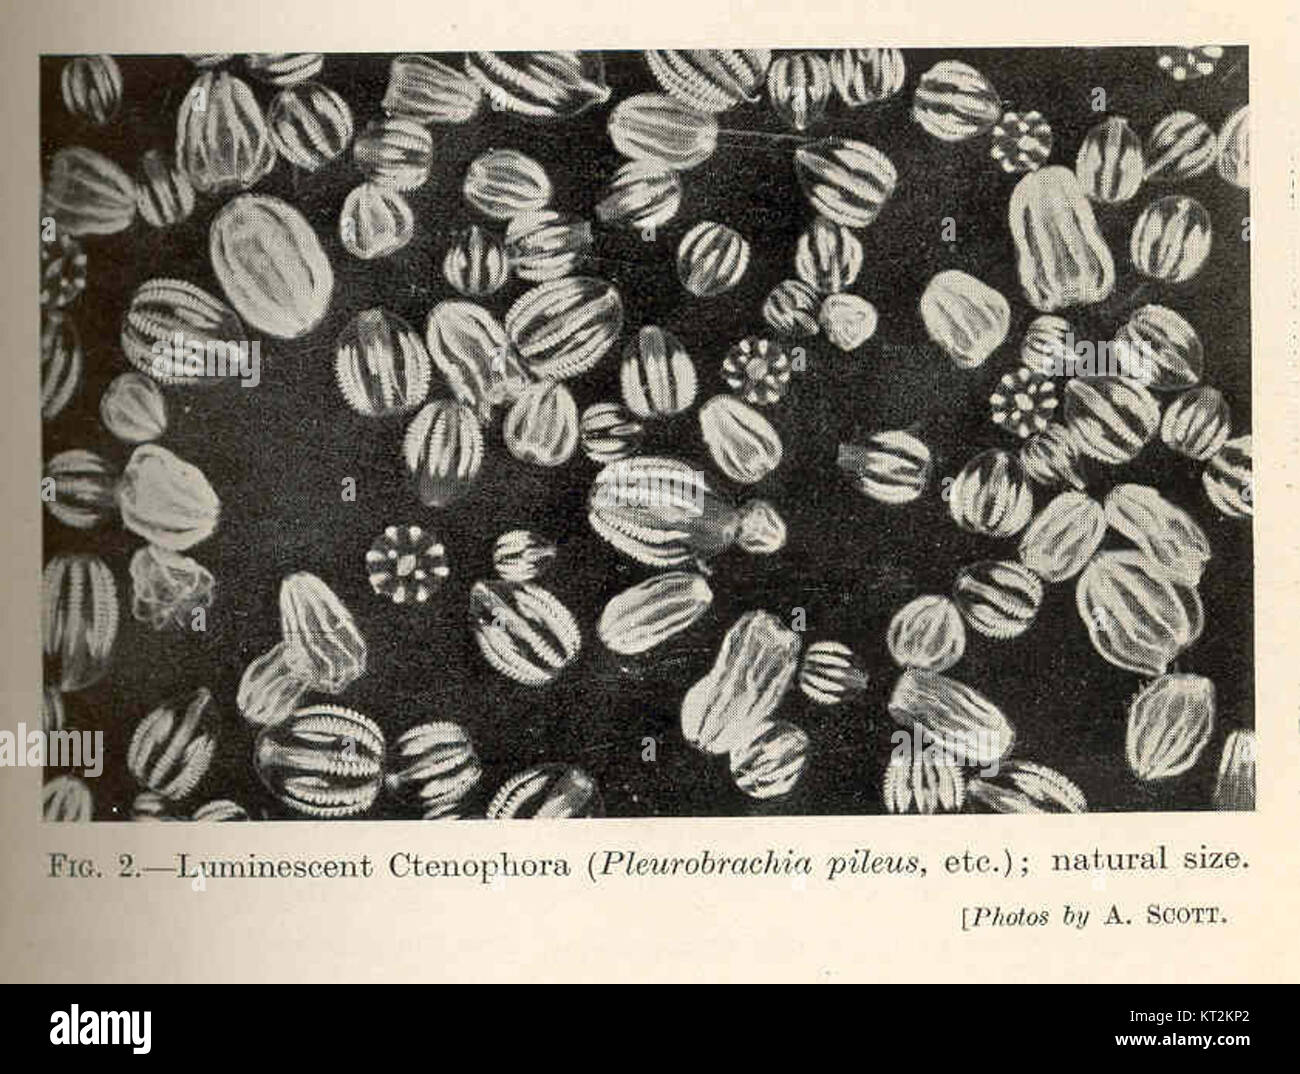 36342 Luminescent Ctenophora (Pleurobrachia pileus, etc) Stock Photo